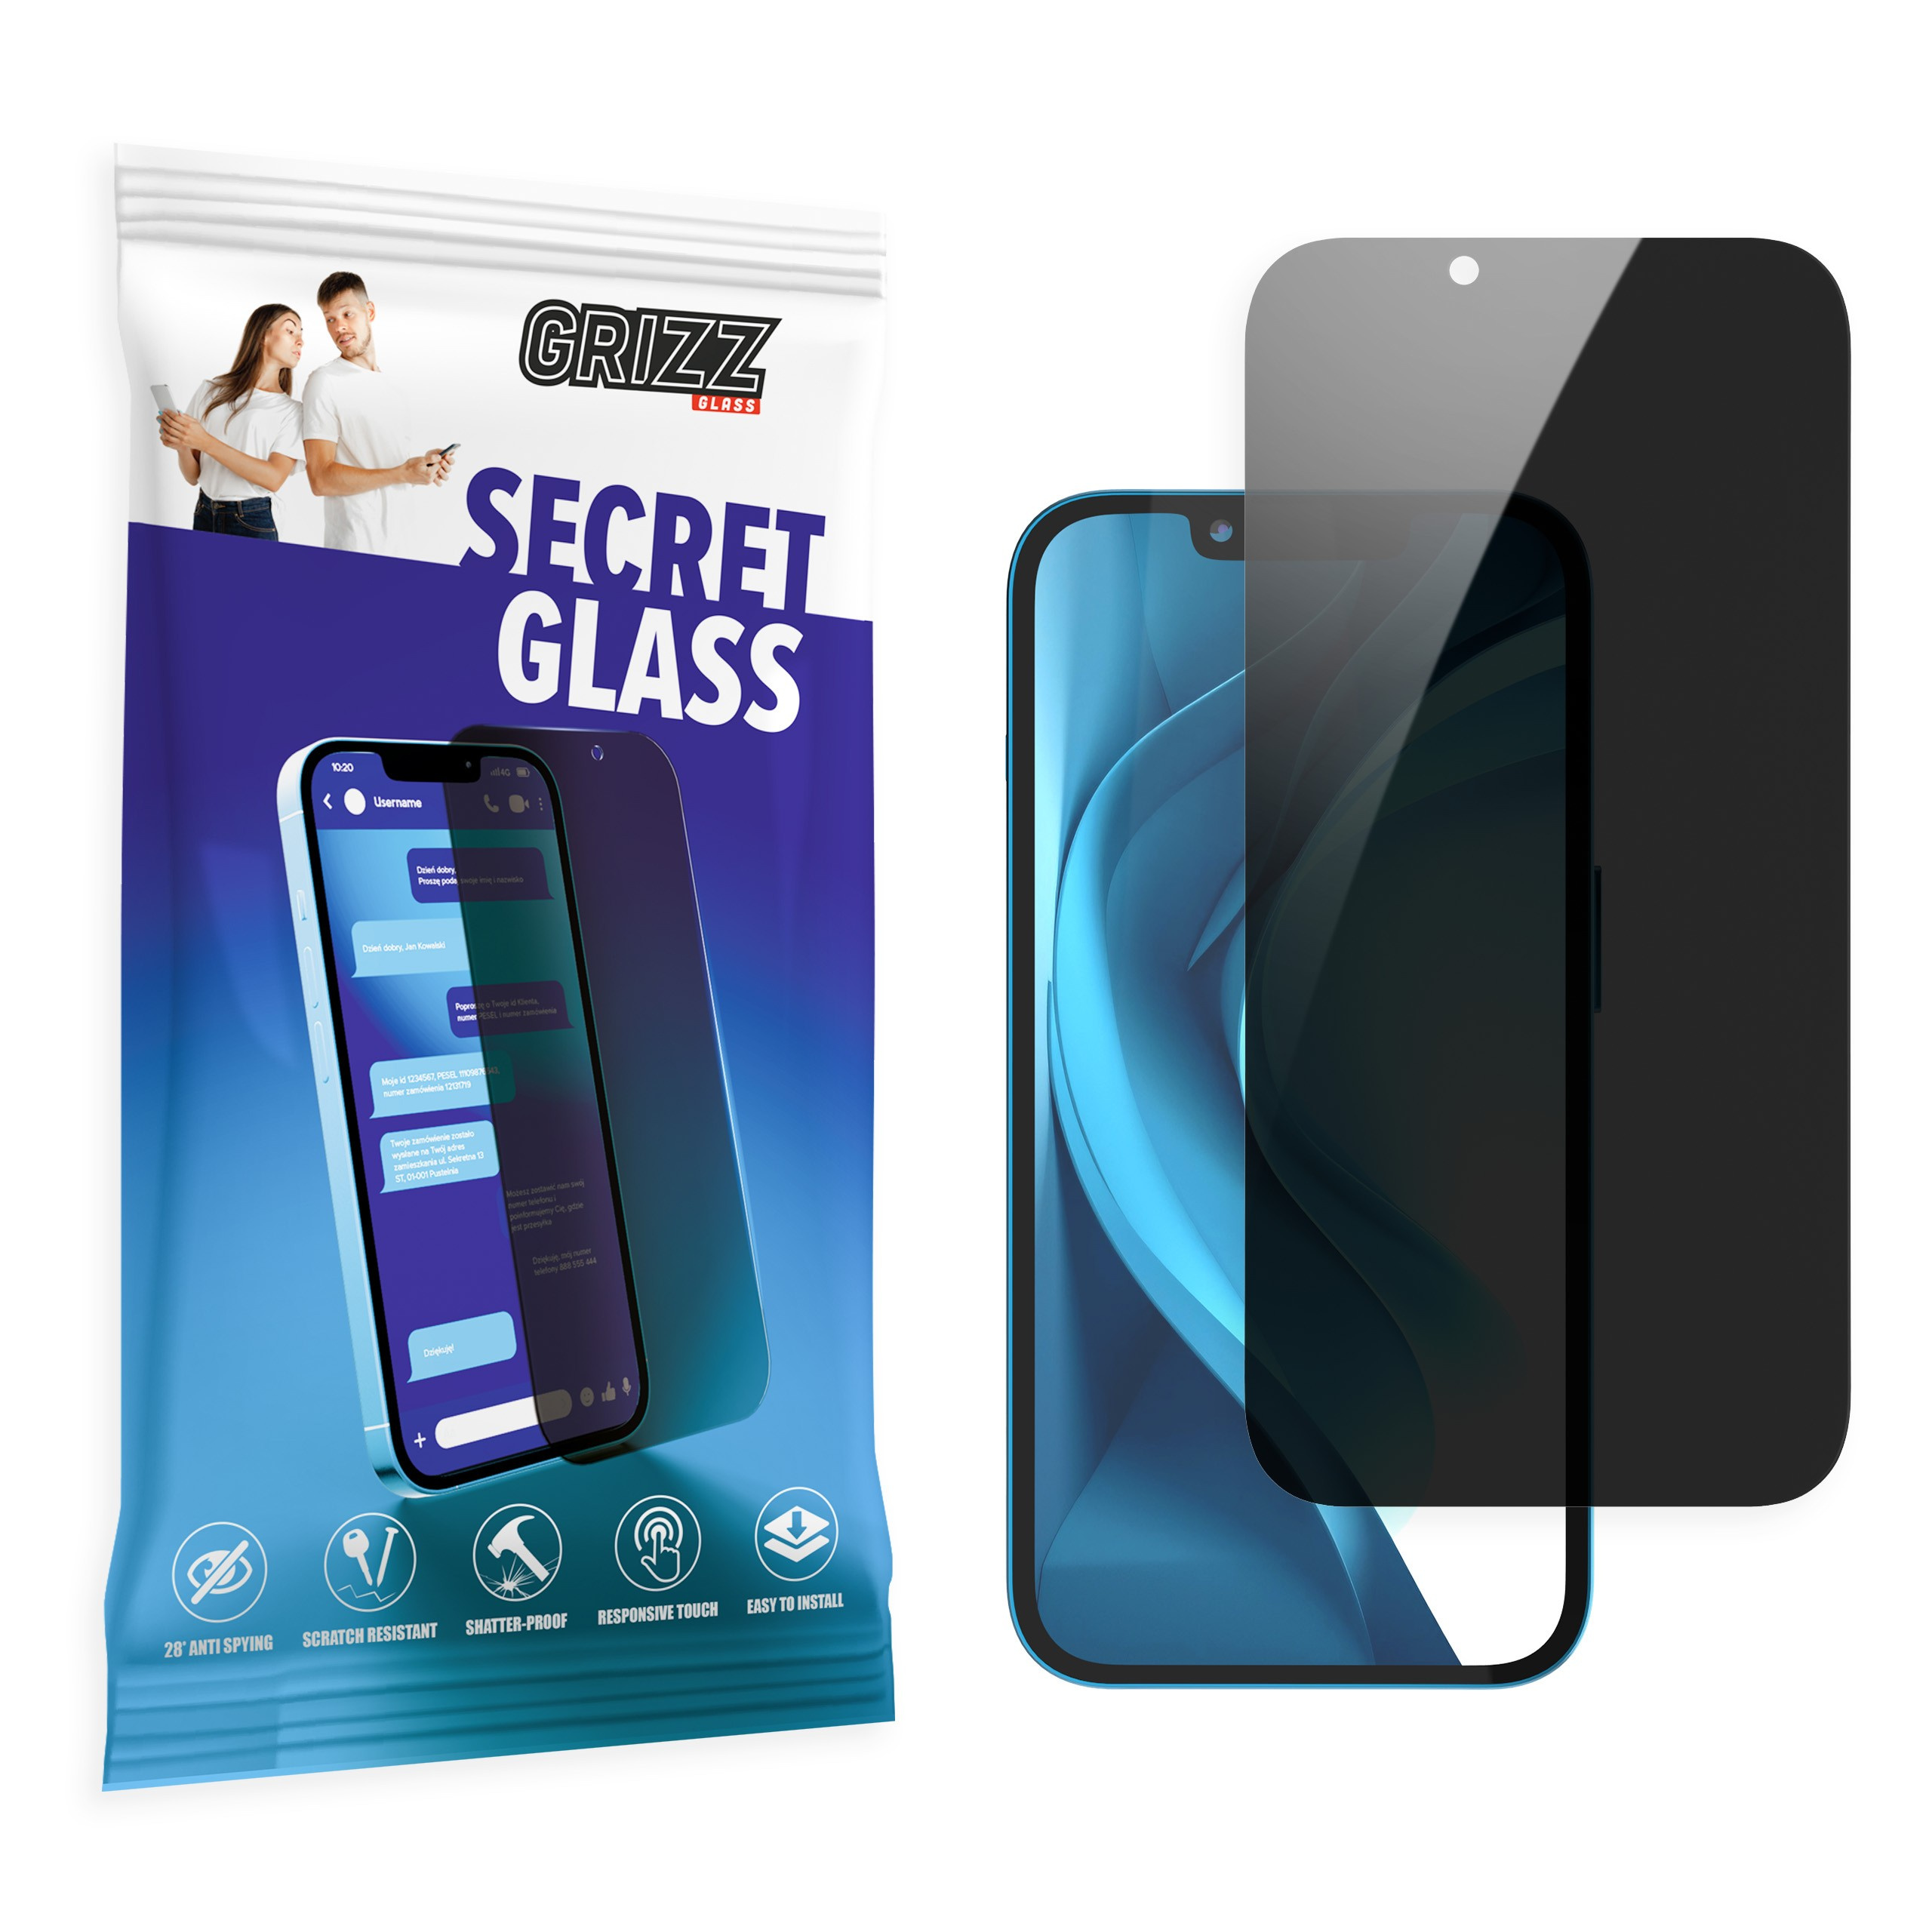 GrizzGlass SecretGlass Huawei Mate 10 Lite/Nova 2i